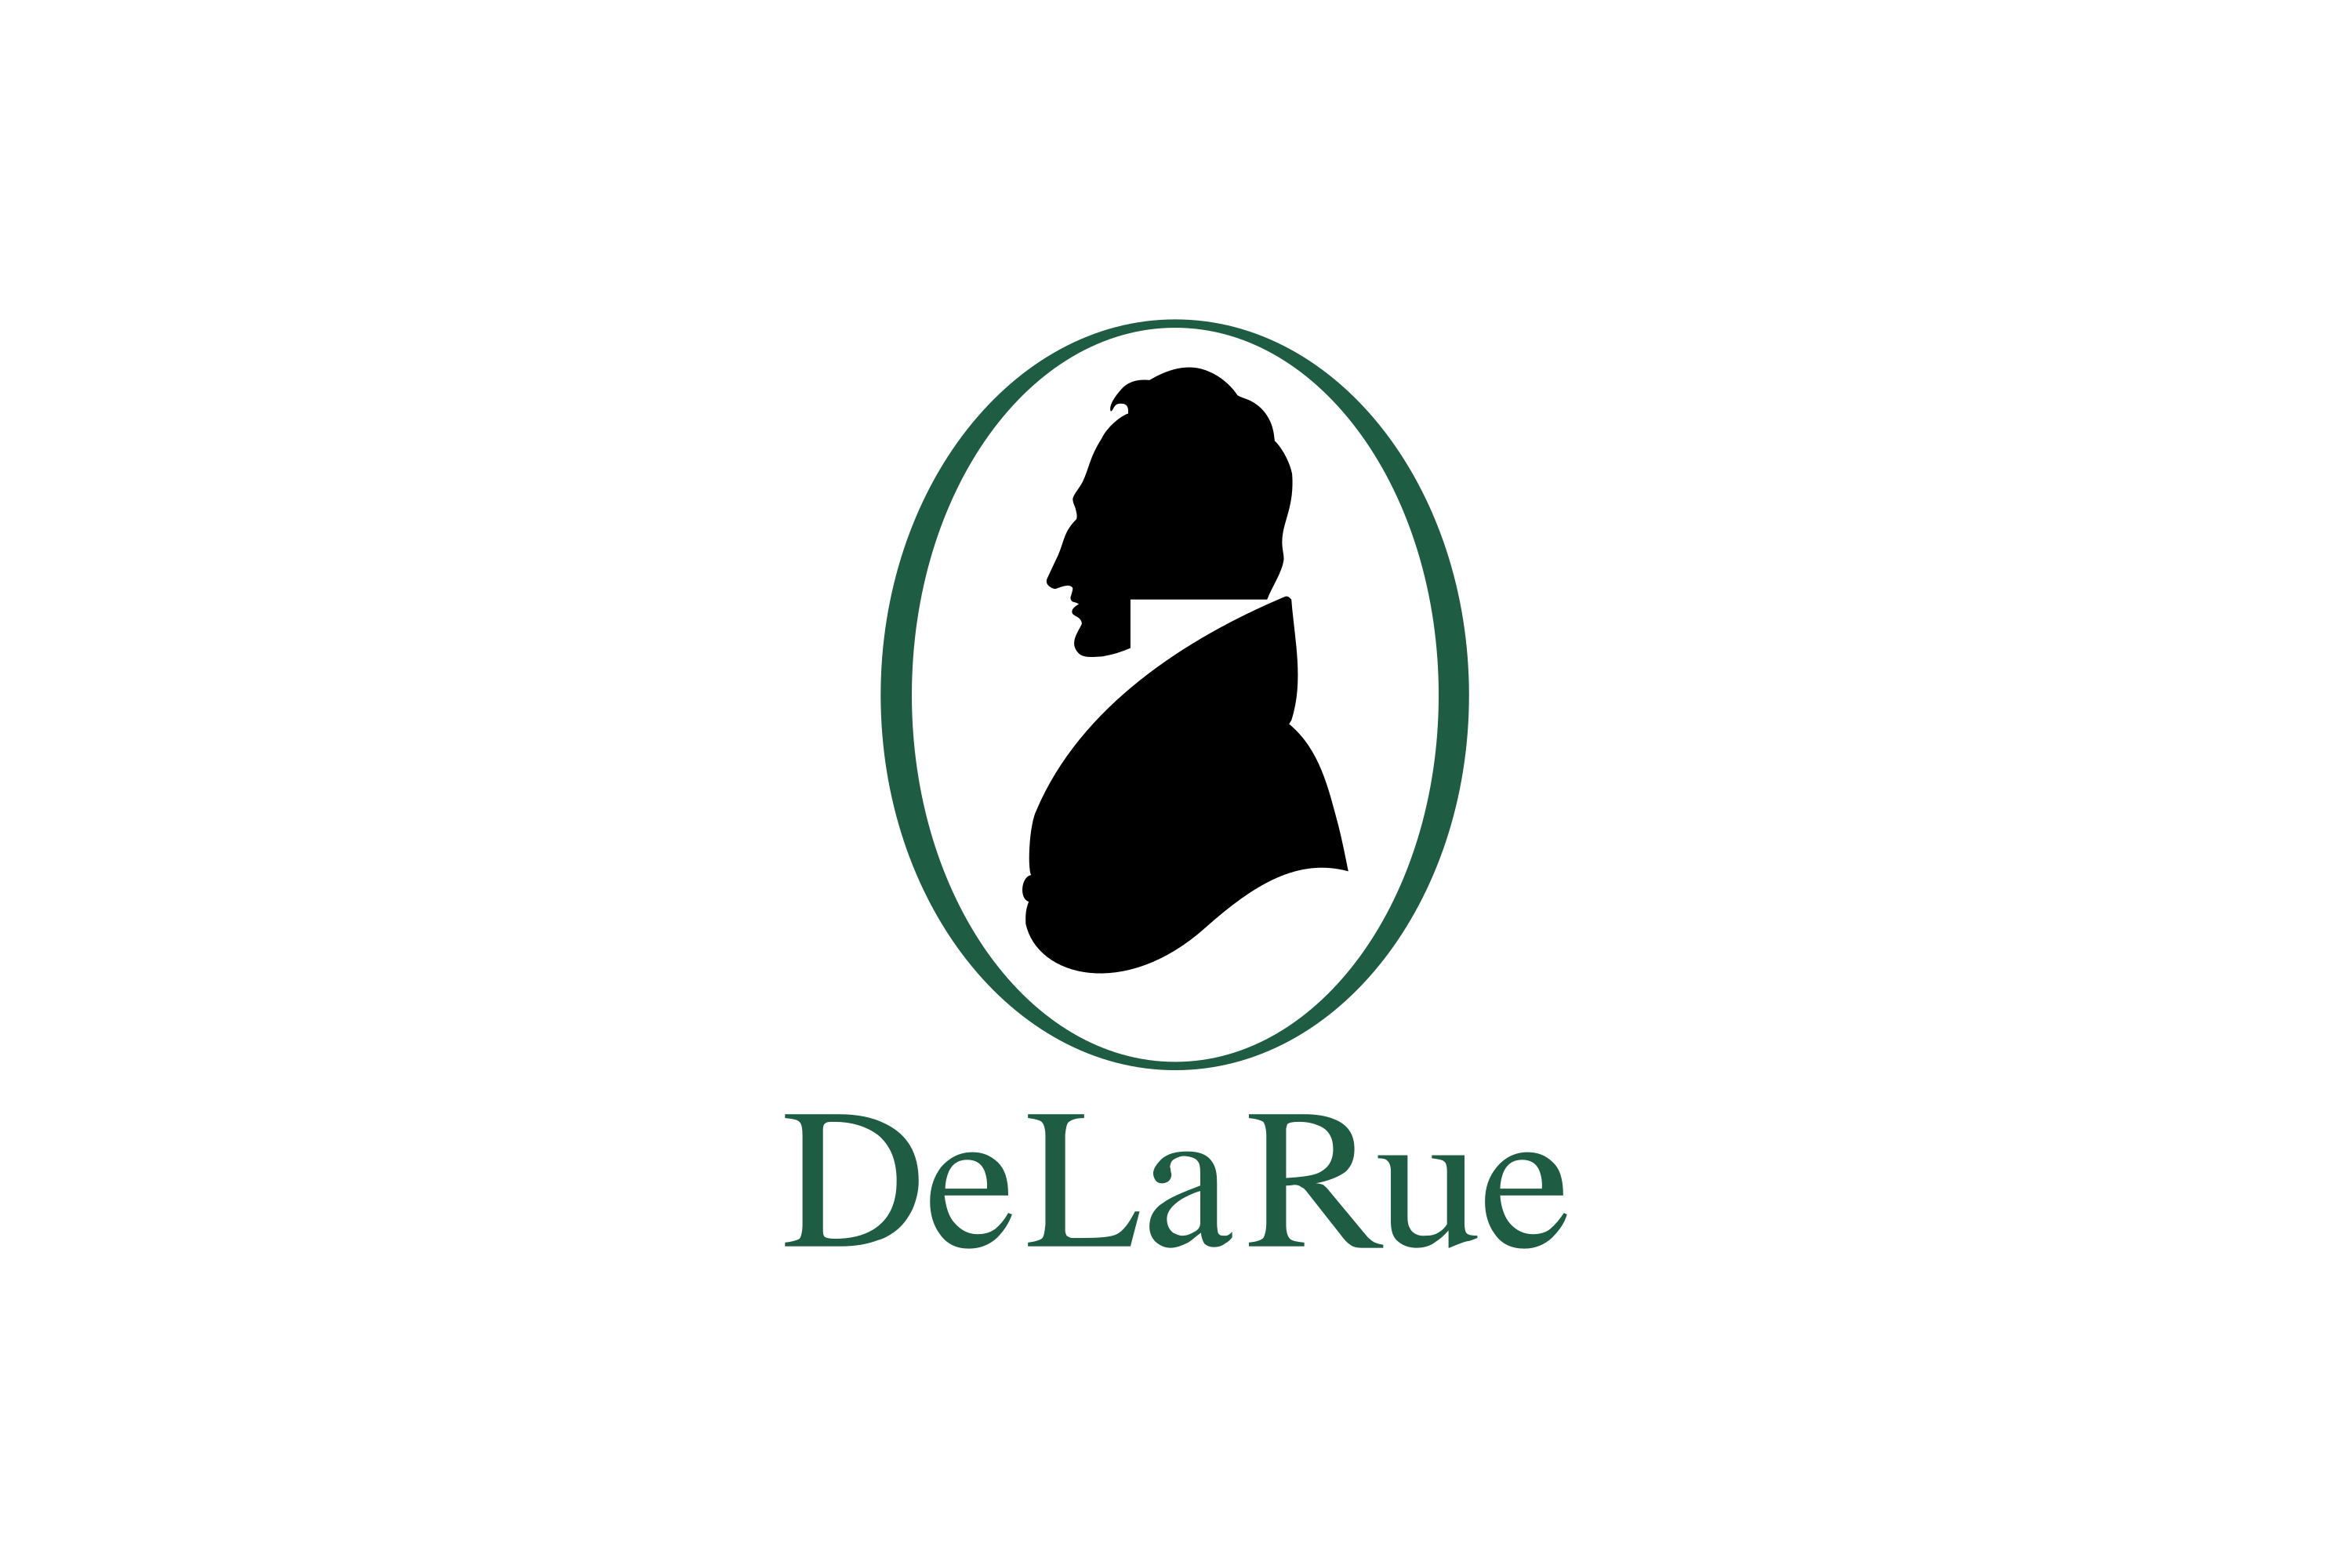 Download De La Rue Logo in SVG Vector or PNG File Format - Logo.wine